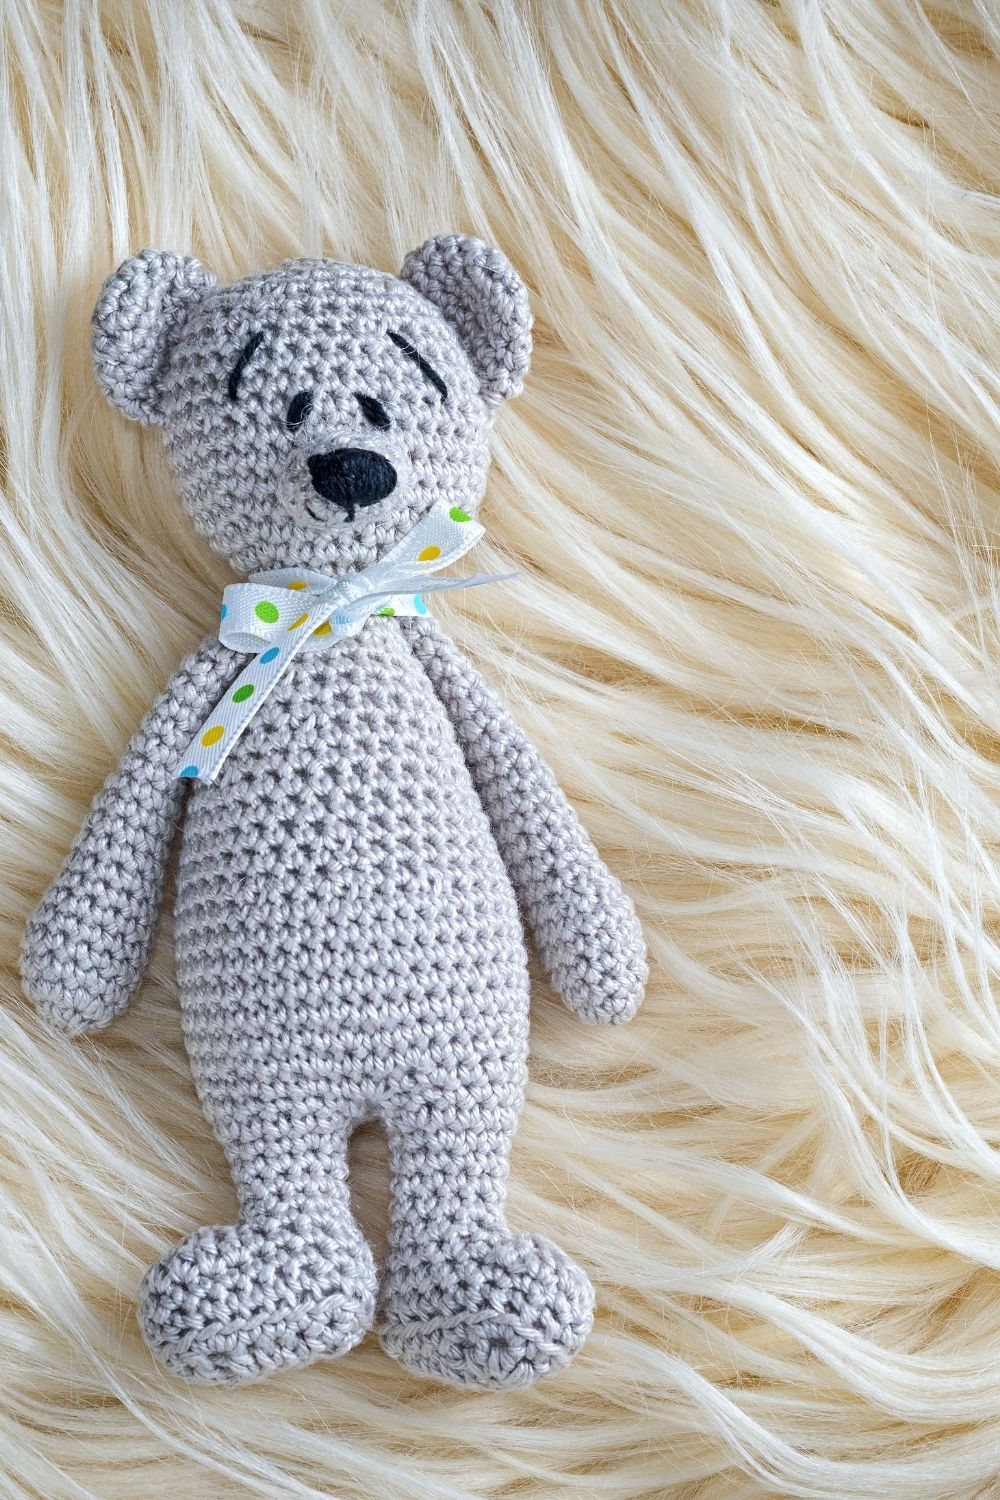 10 Adorable Crochet Teddy Bear Patterns